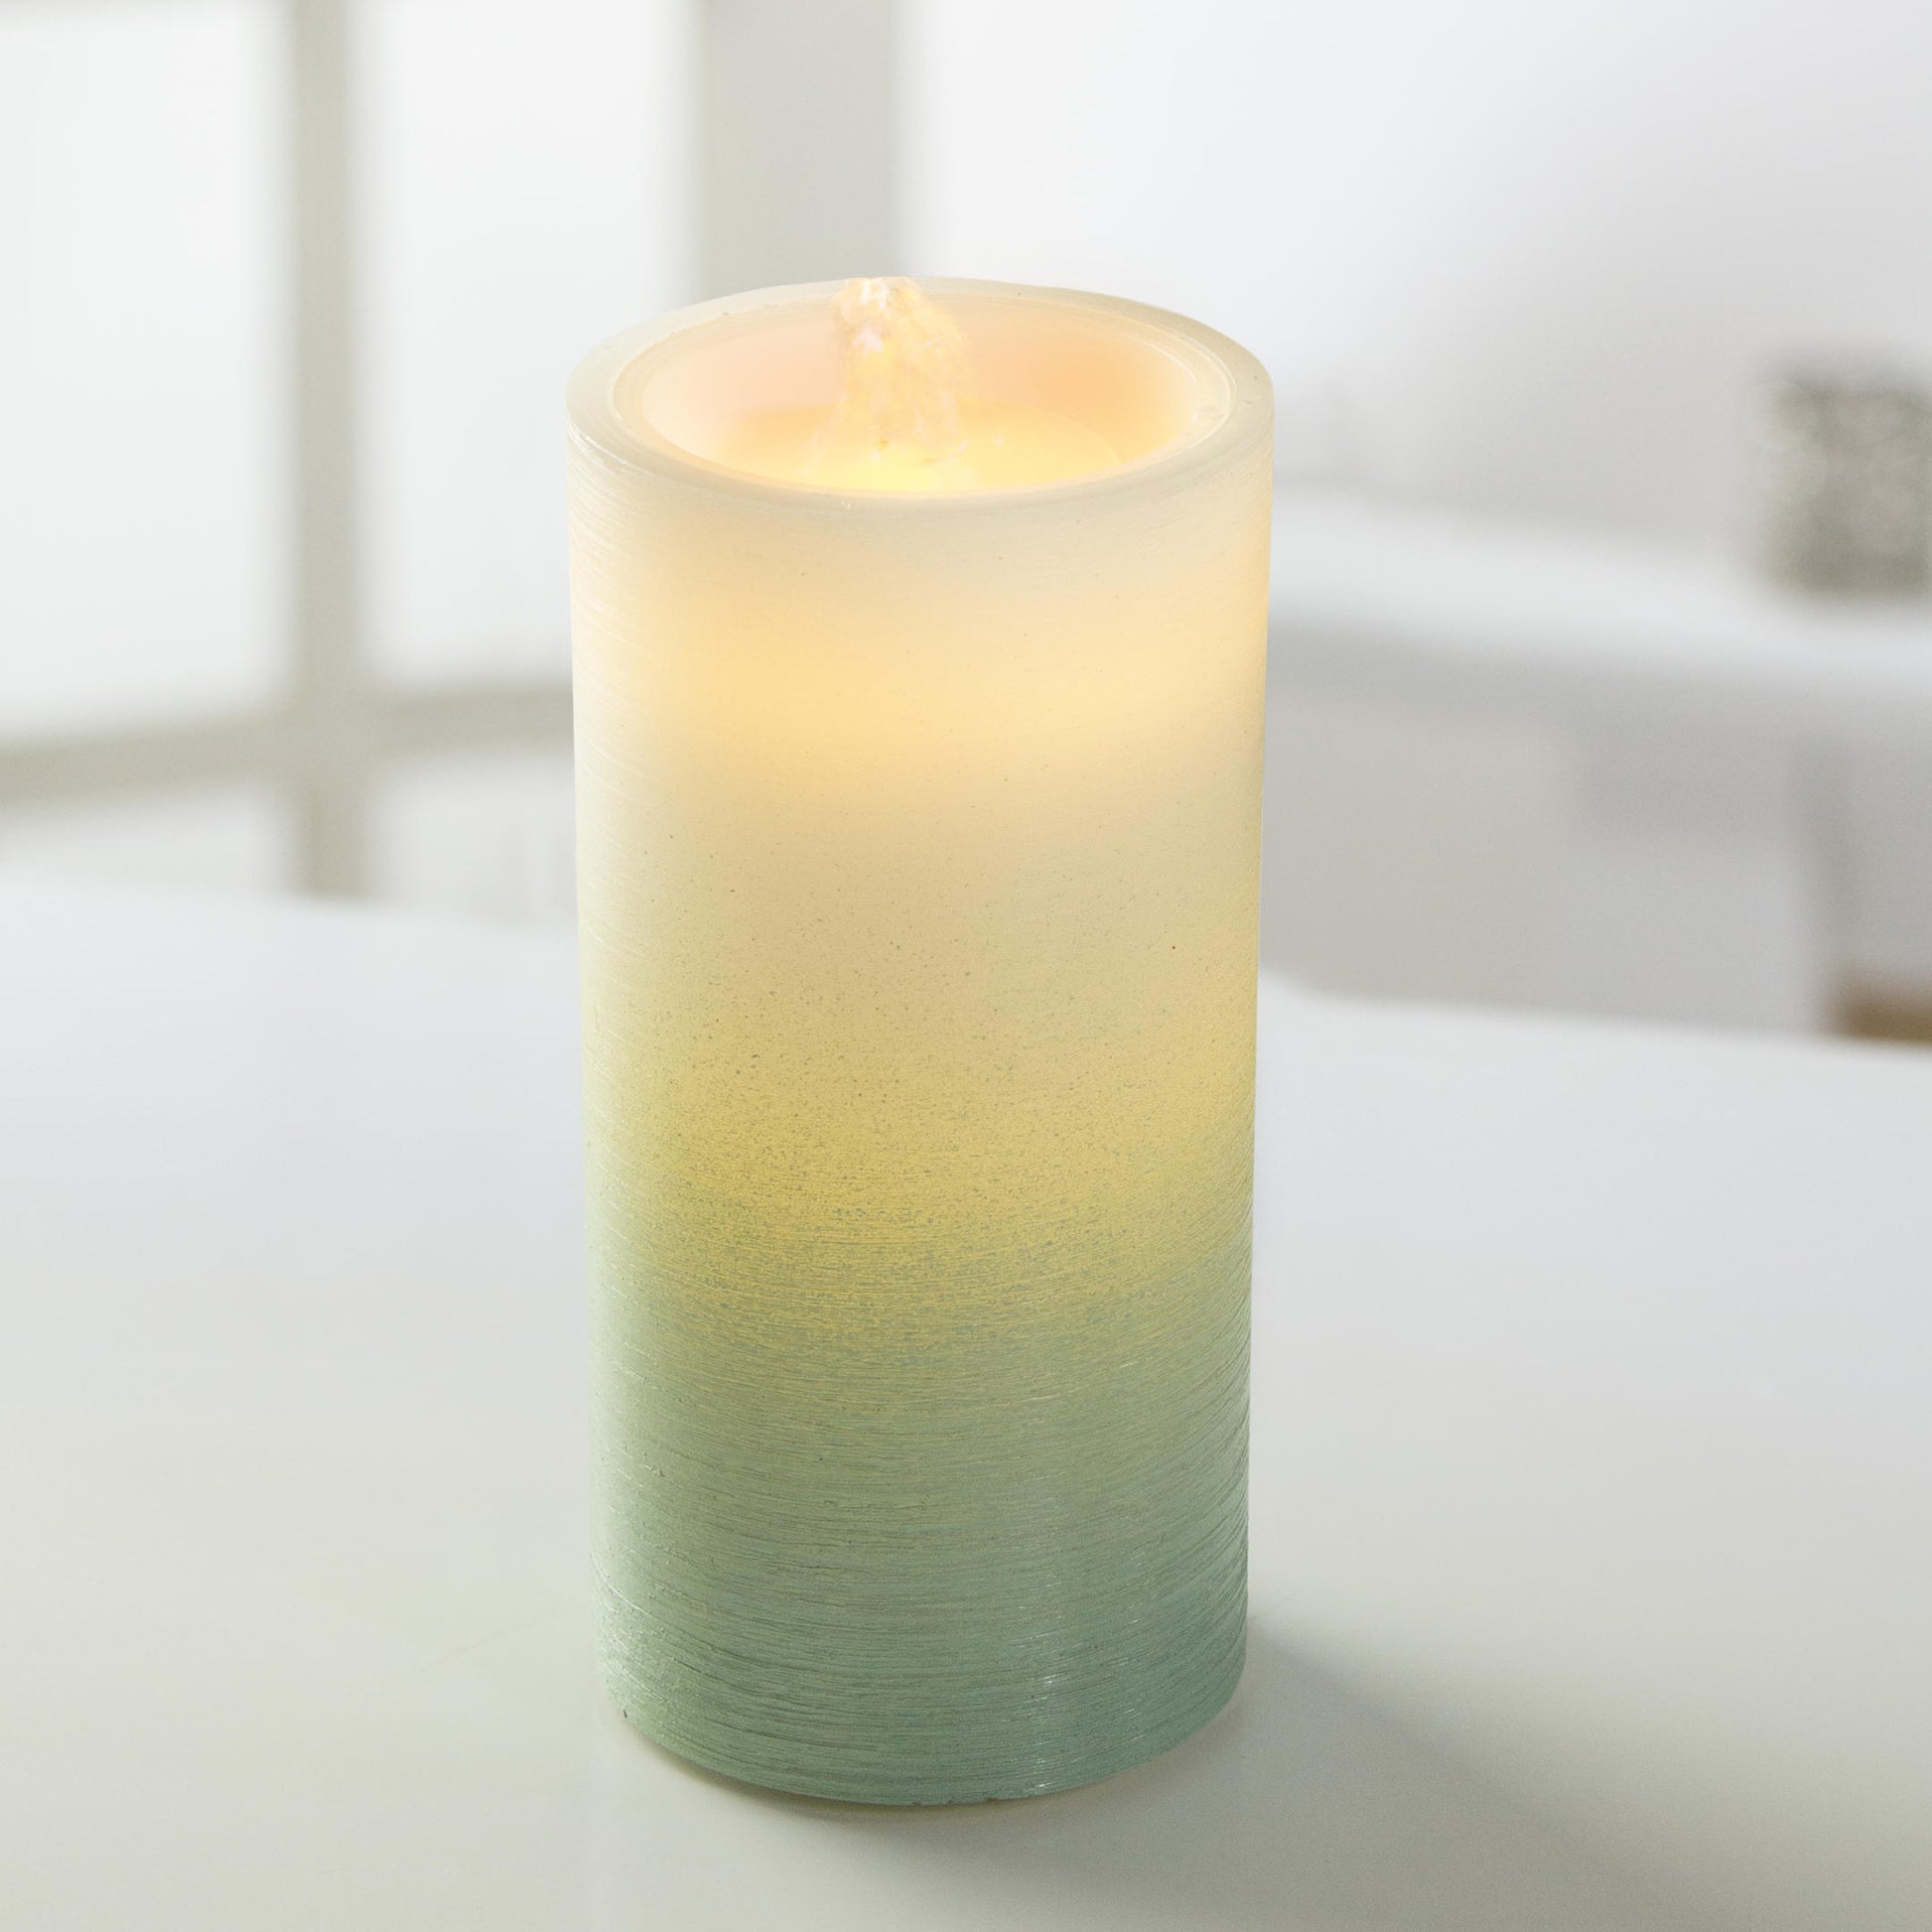 Vodná sviečka Bubbling Water Candle - relaxujte a meditujte s príjemnou atmosférou